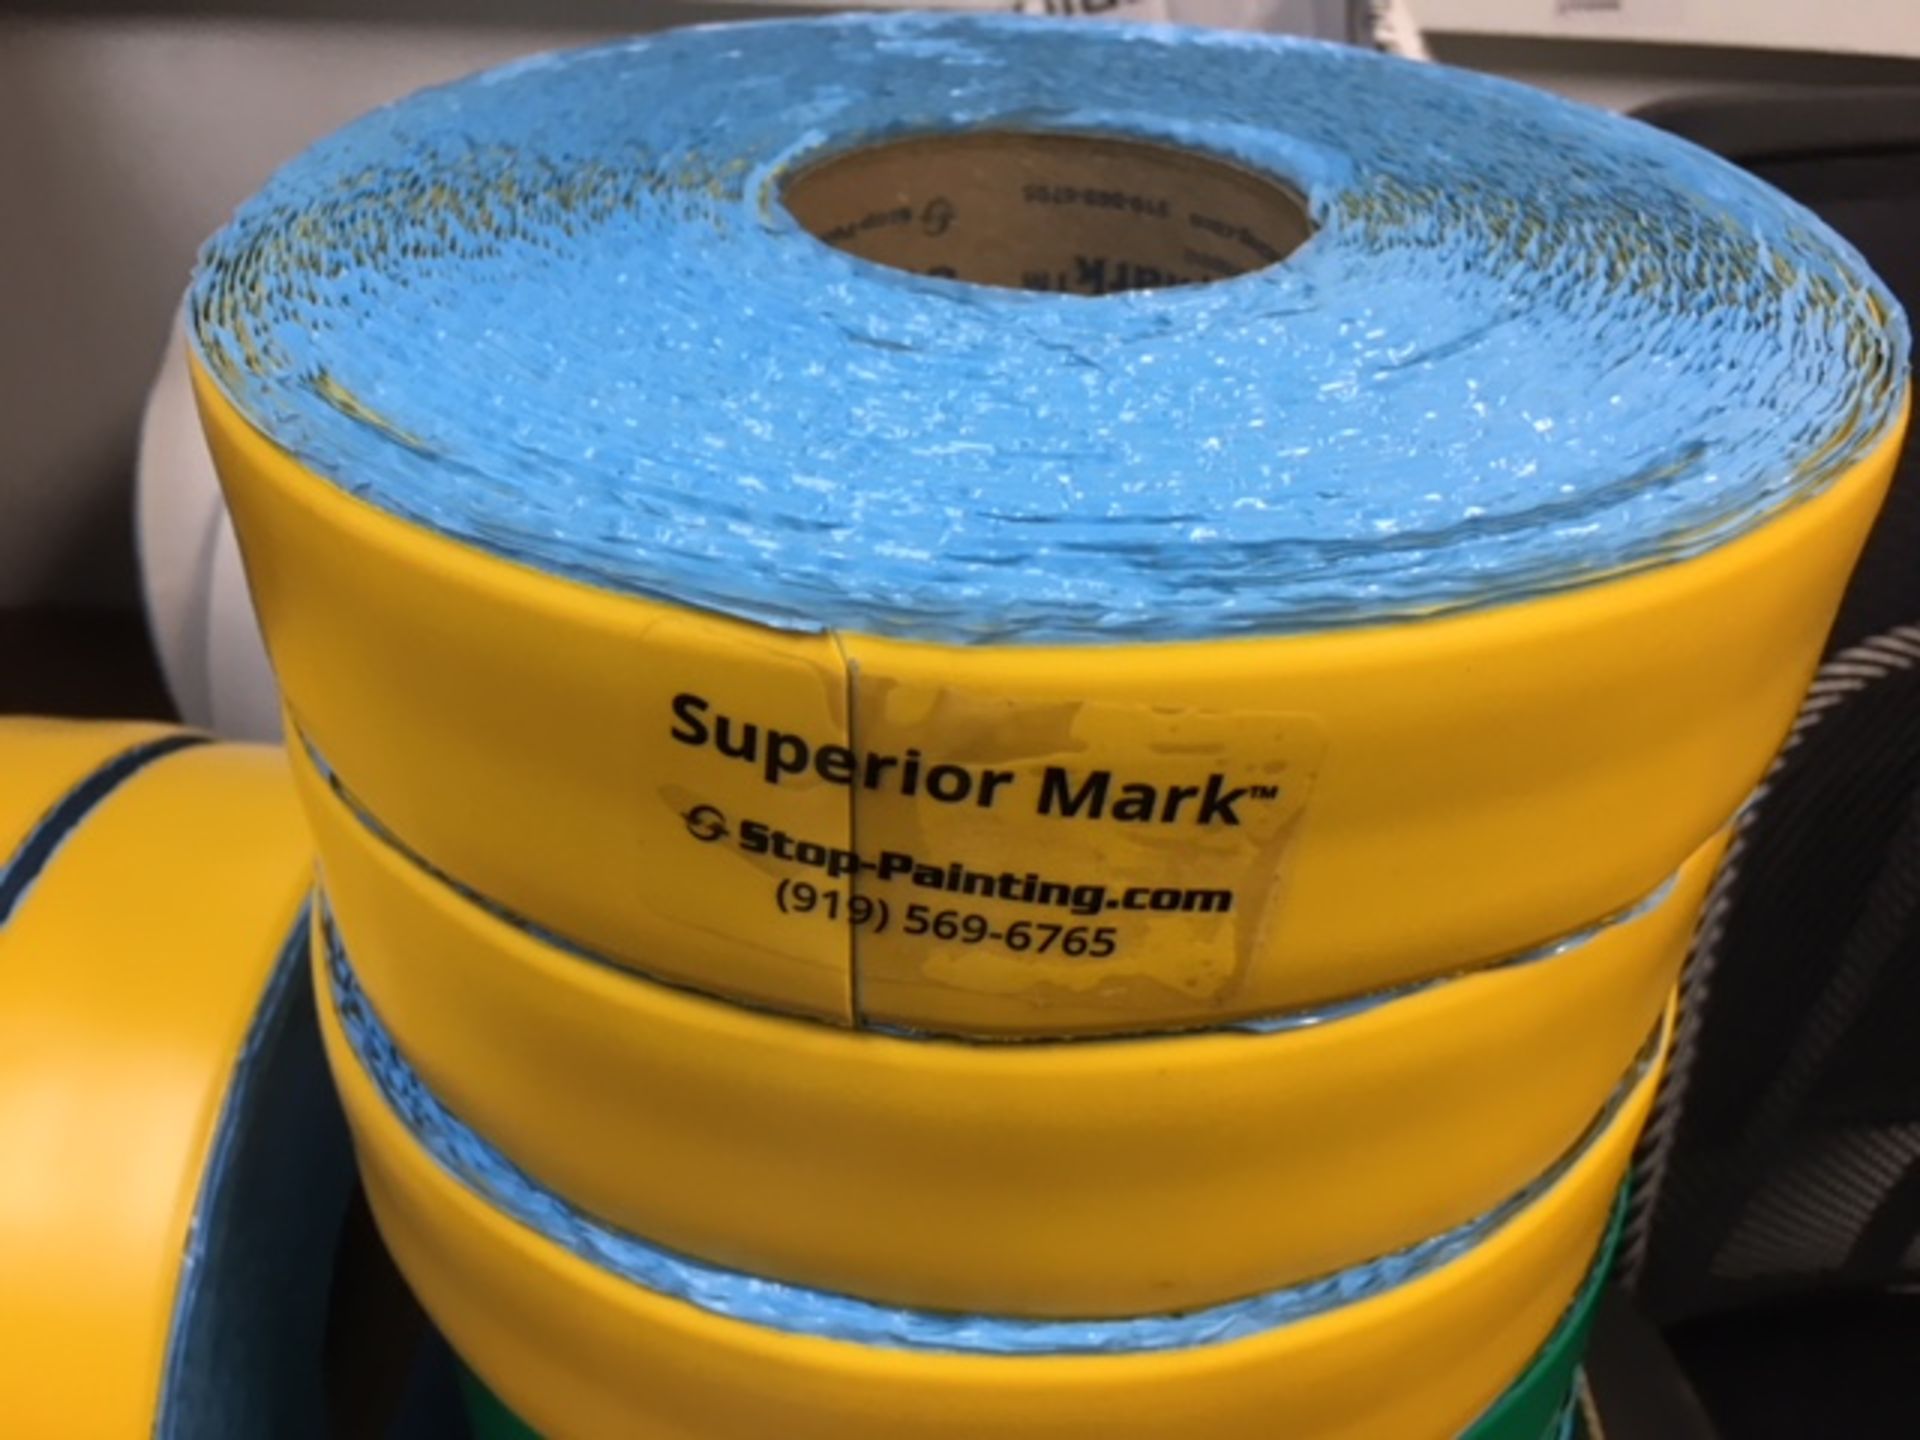 SUPERIOR-MARK "STOP PAINTING" SELF-ADHERING PLASTIC FLOOR SAFETY STRIPPING - Bild 2 aus 3